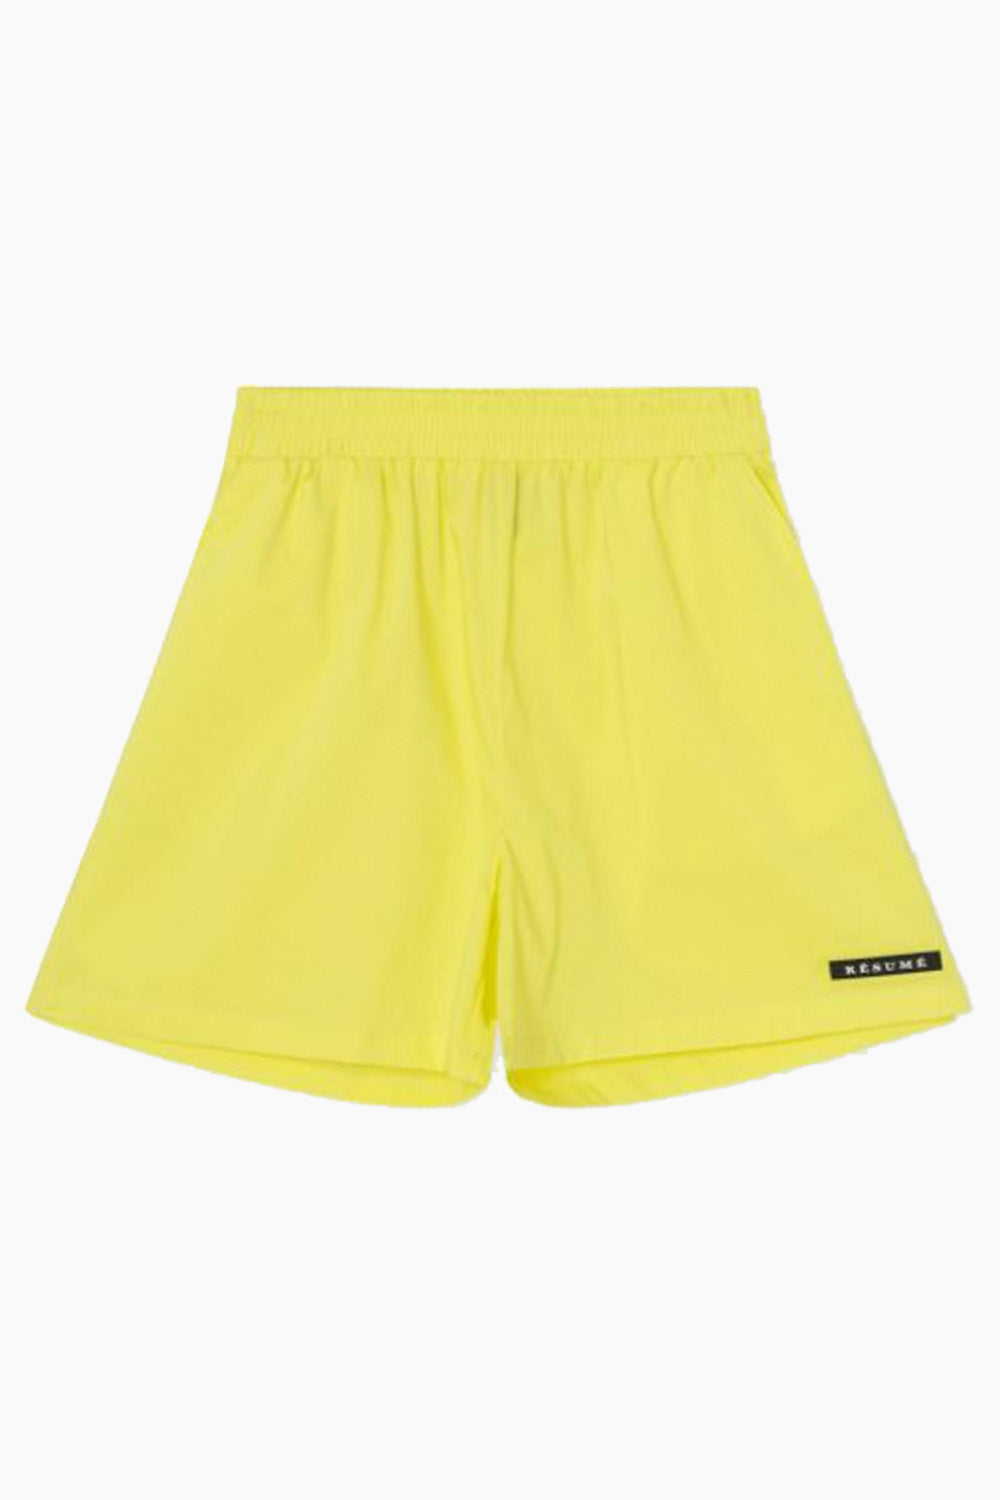 EllenRS Shorts - Yellow - Résumé